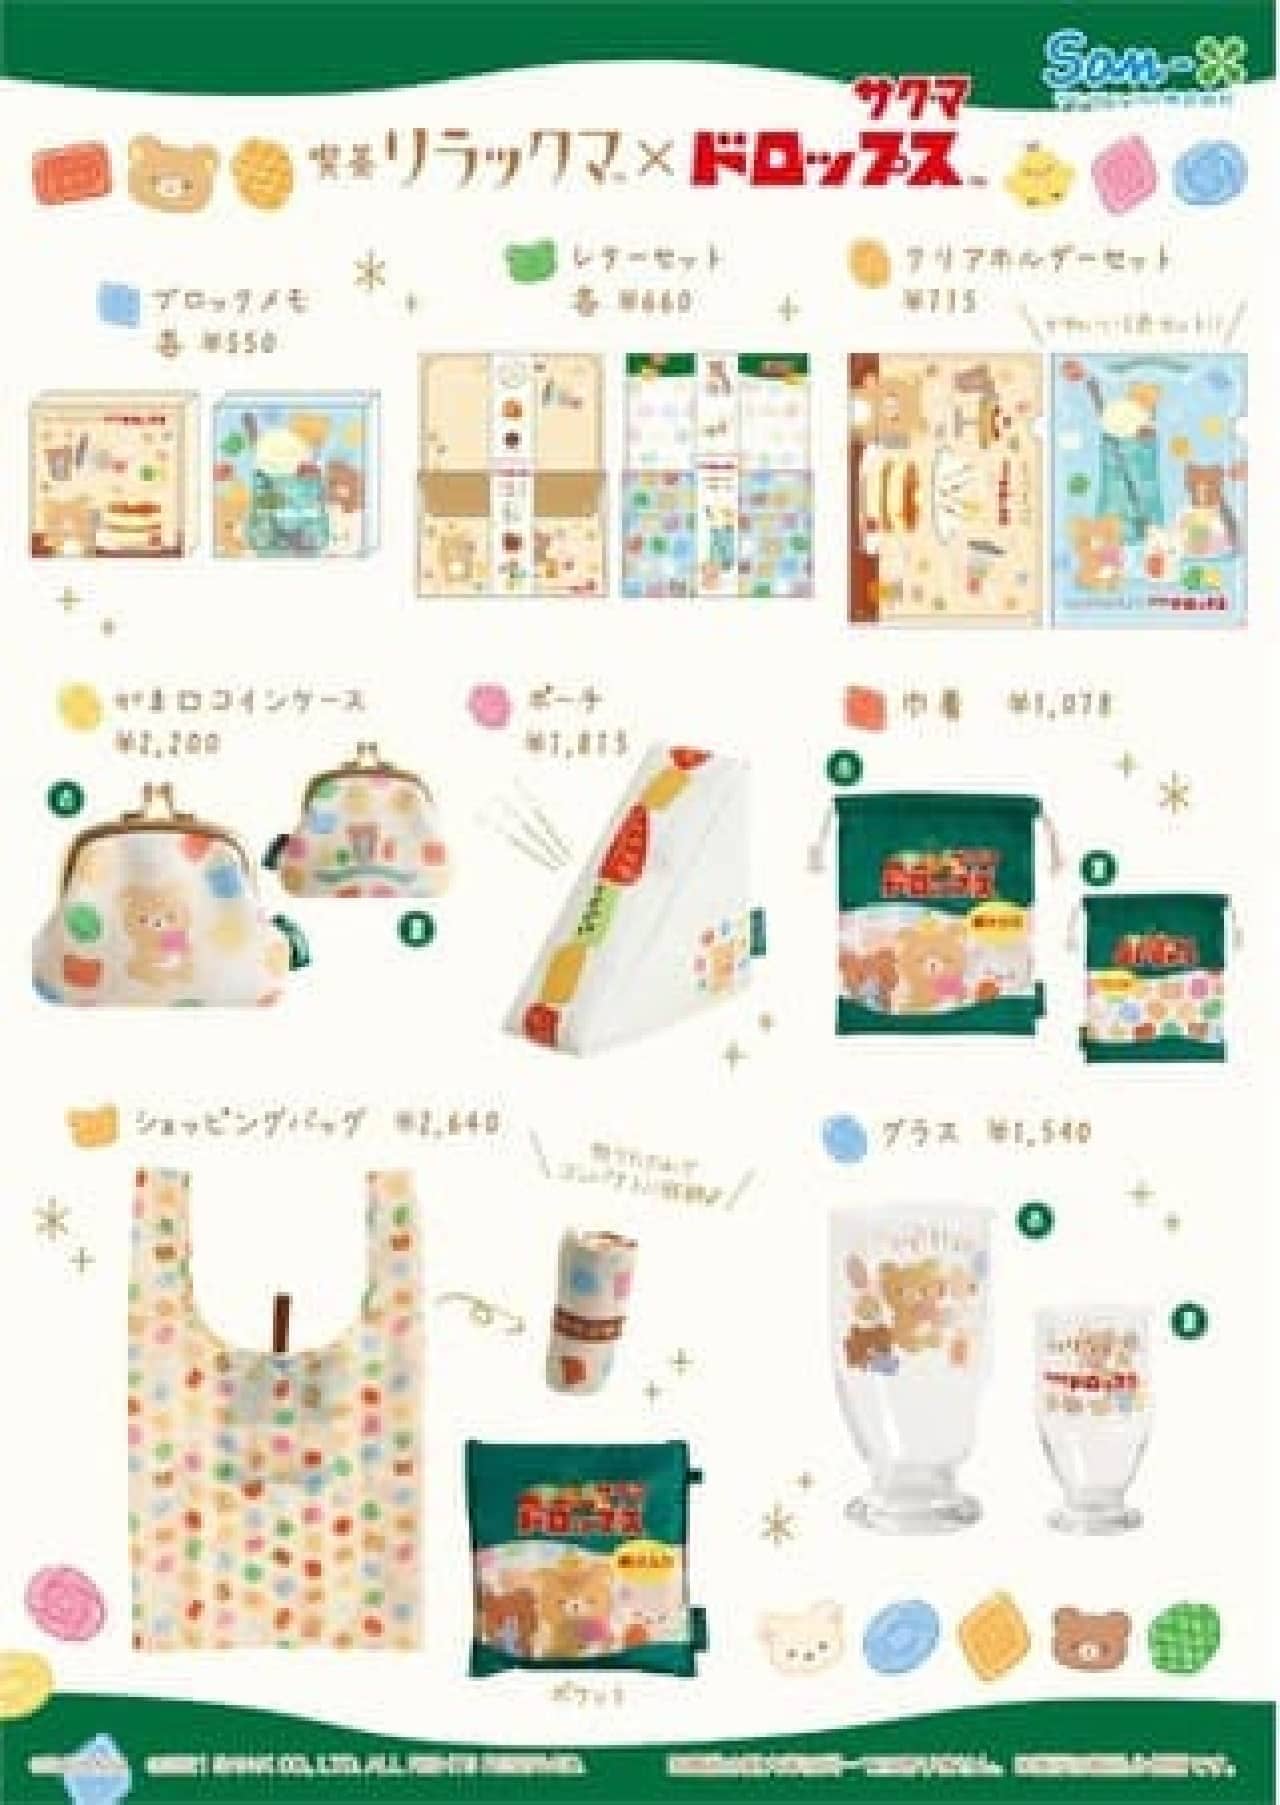 Collaboration between Rilakkuma and Sakuma Drops --Coffee Rilakkuma's cute art! Sticker gifts